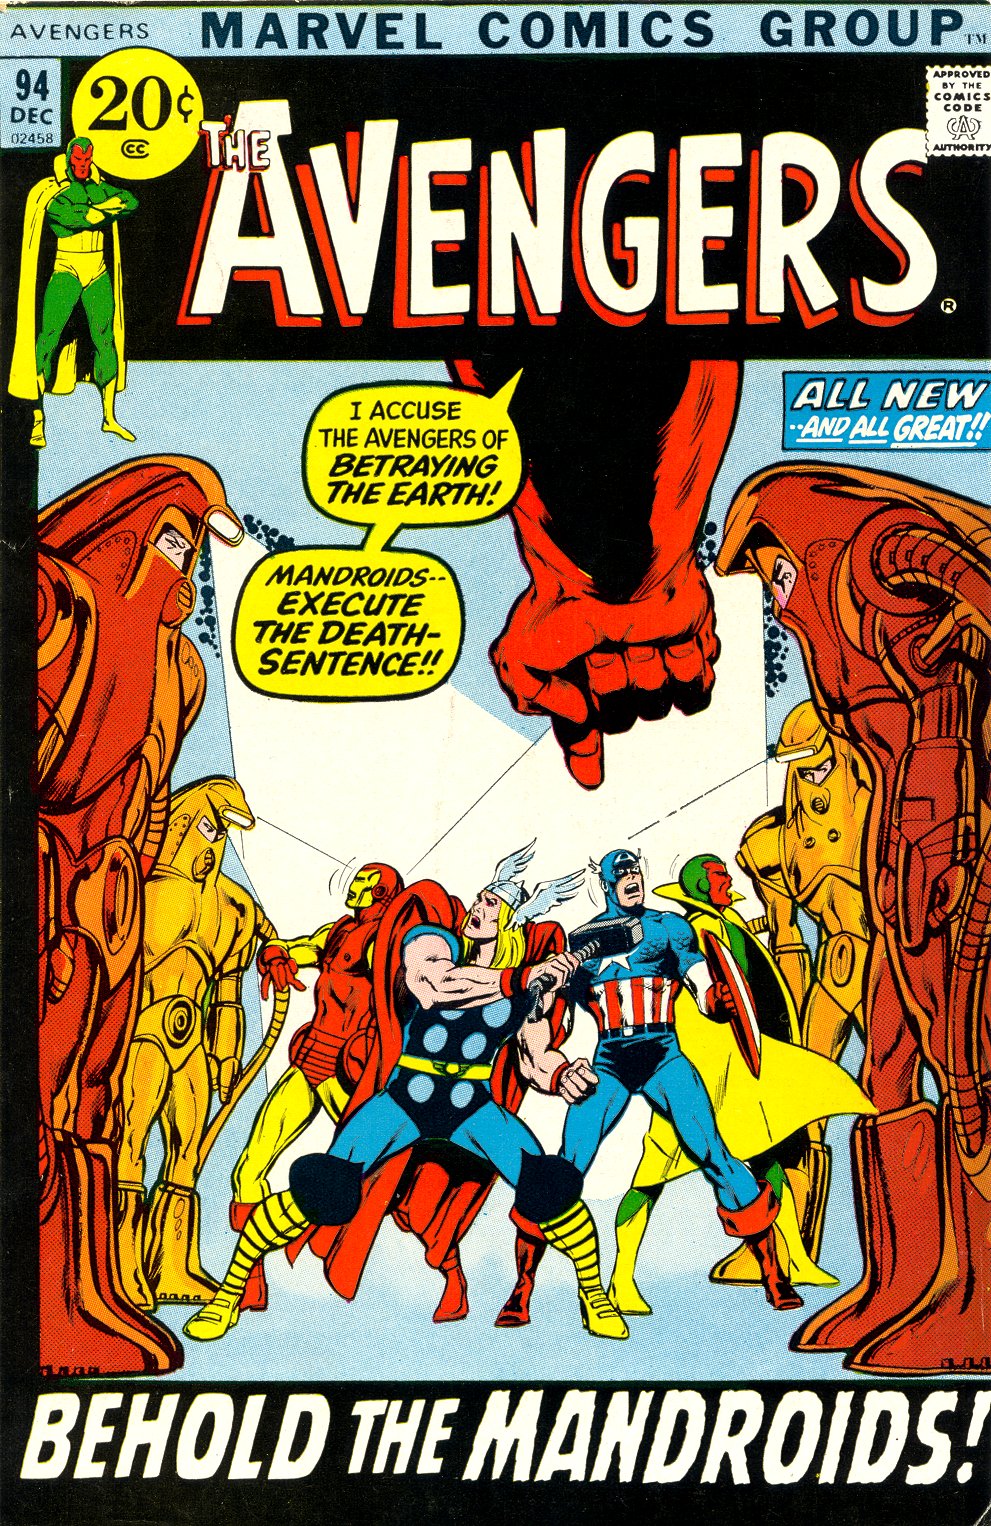 The Avengers Vol. 1 #94